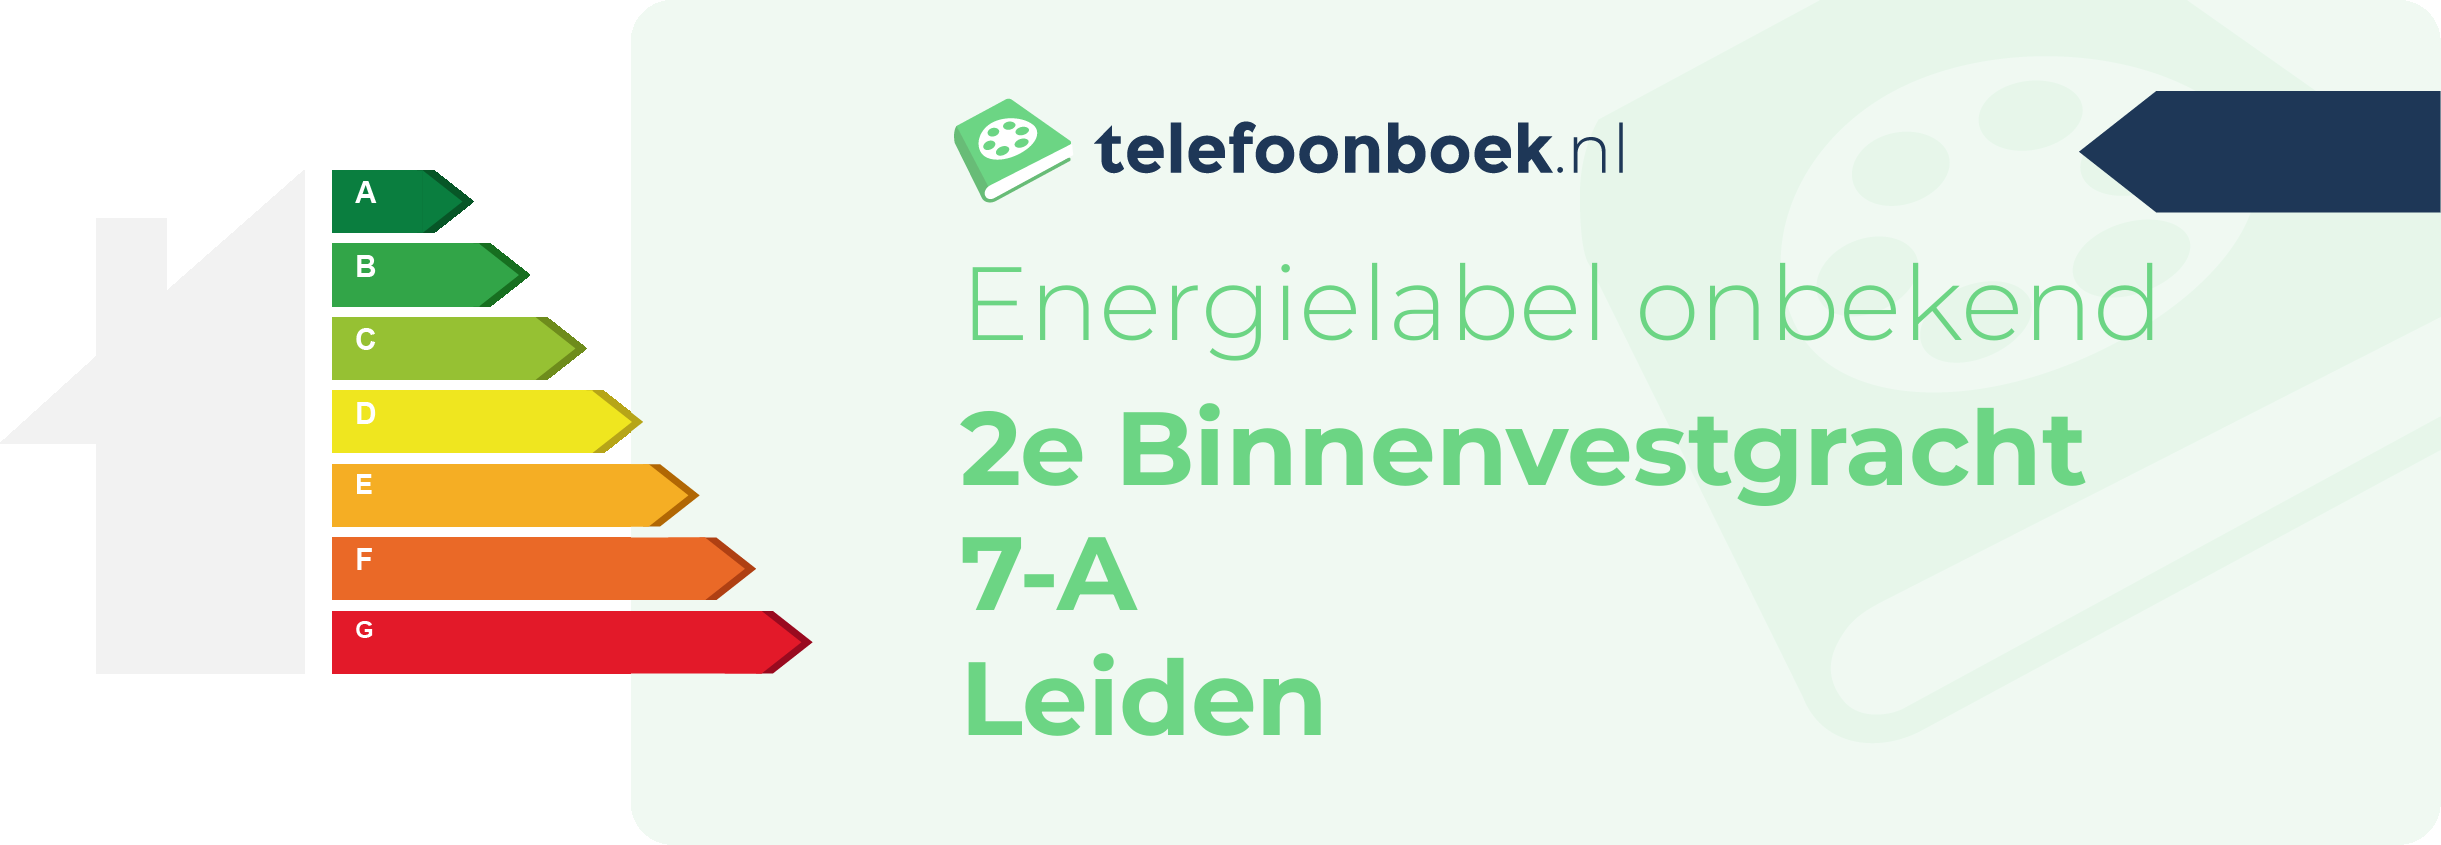 Energielabel 2e Binnenvestgracht 7-A Leiden